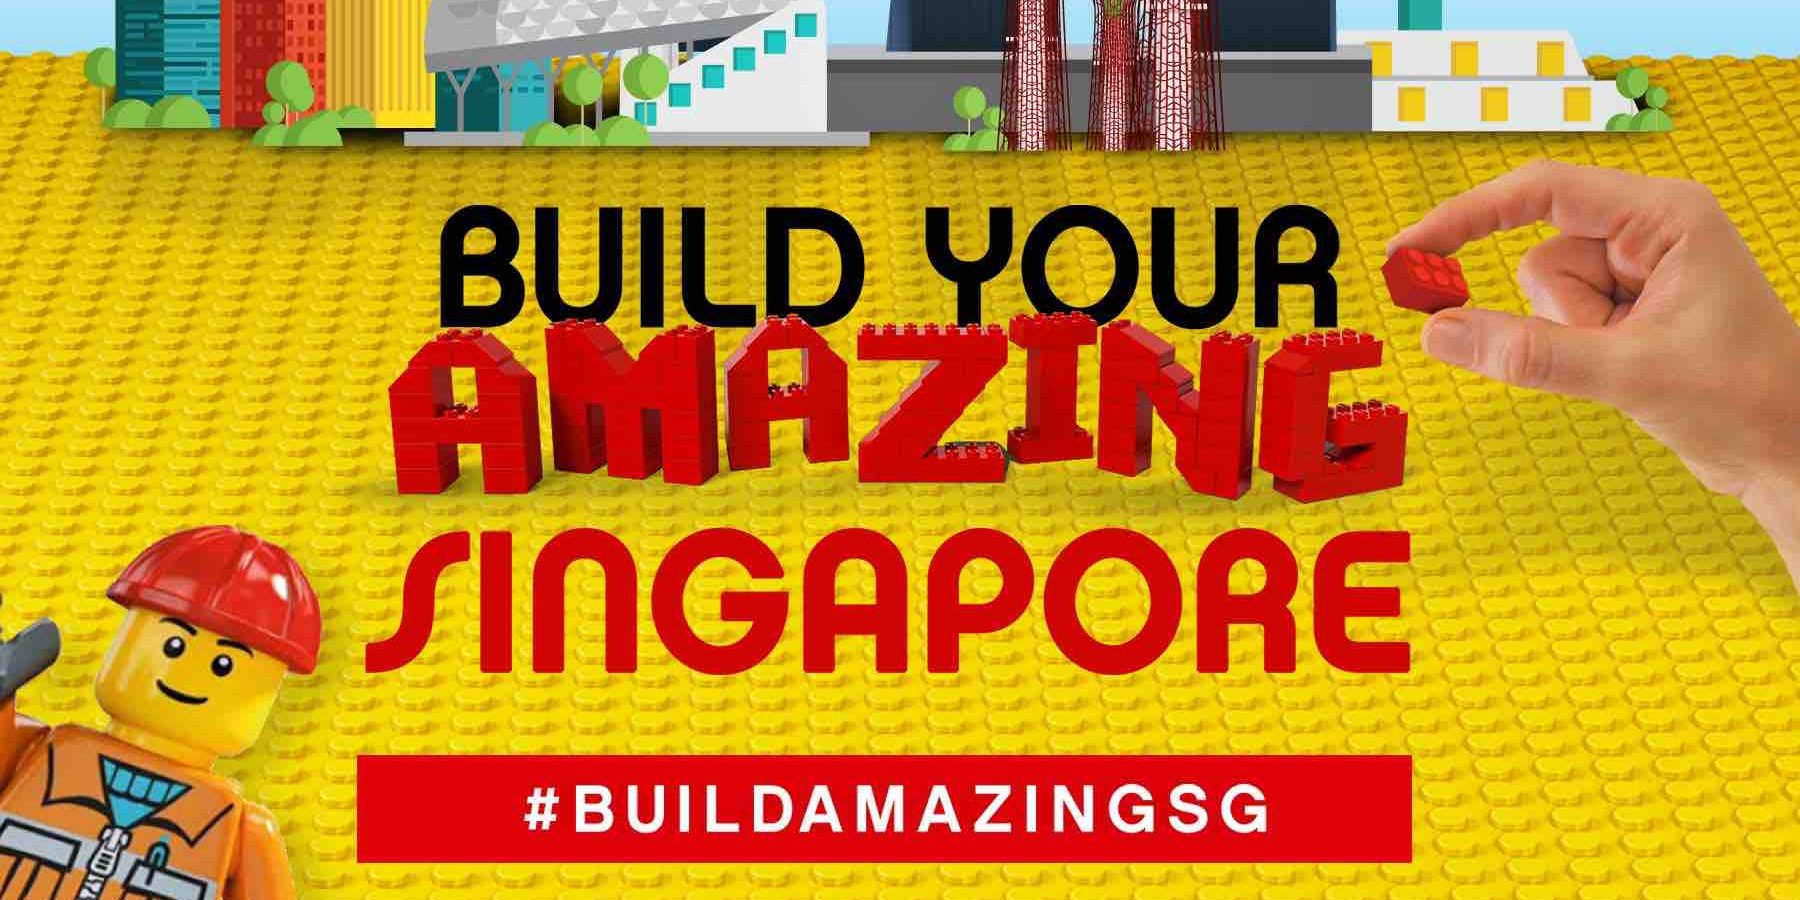 LEGO Singapore Build Amazing Singapore Using LEGO Bricks Contest ends 11 Jun 2017